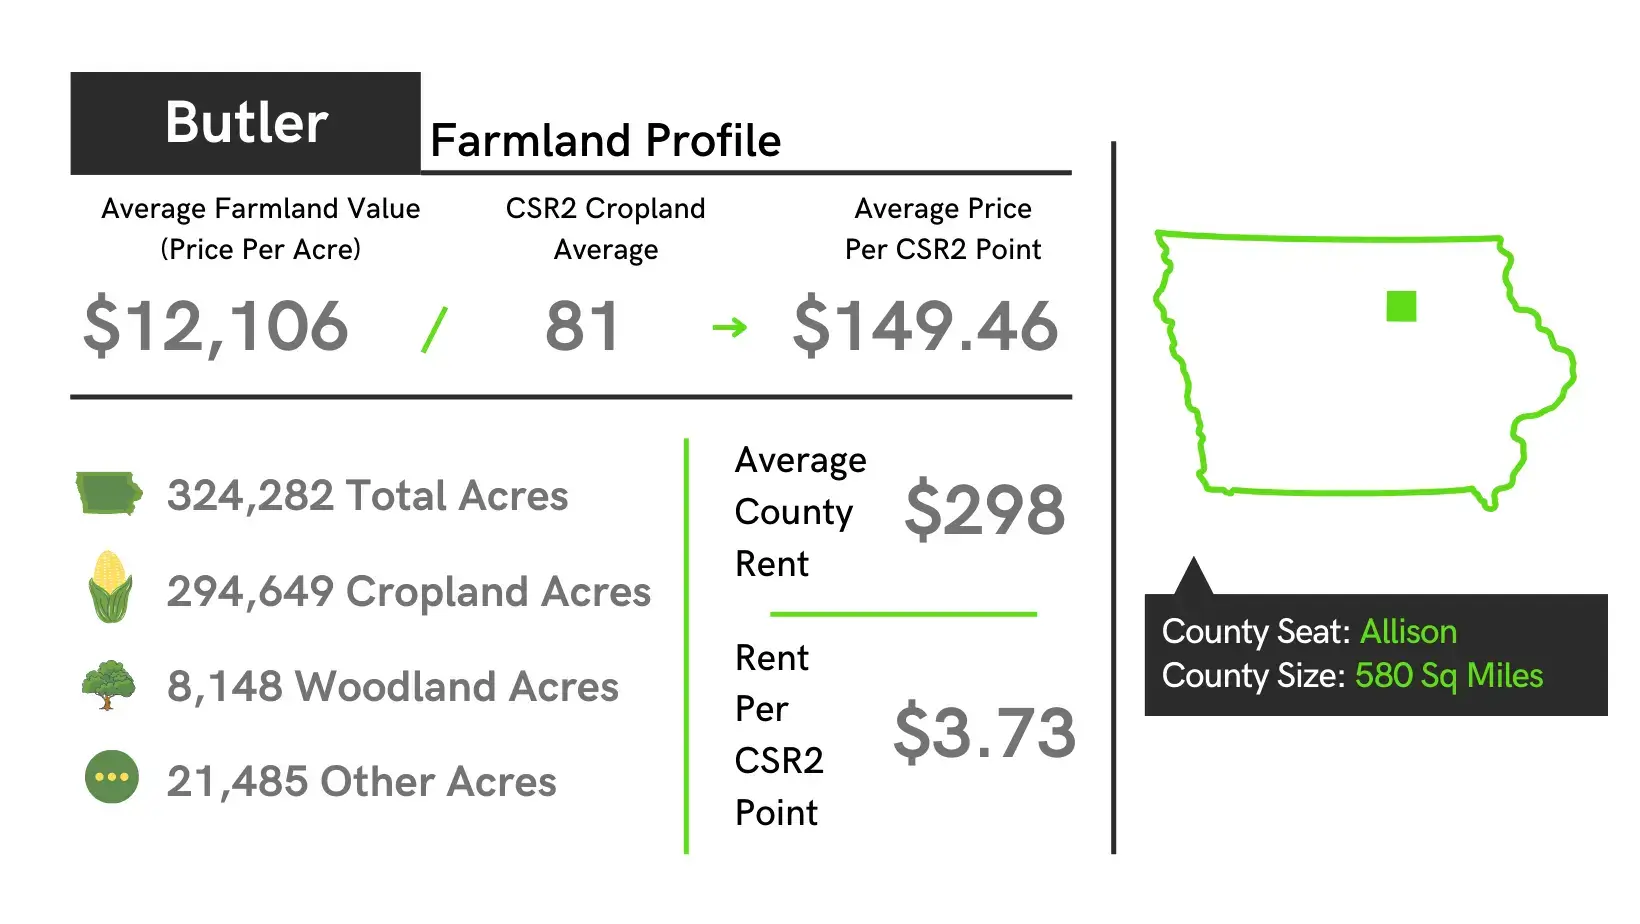 Butler County Farmland Profile